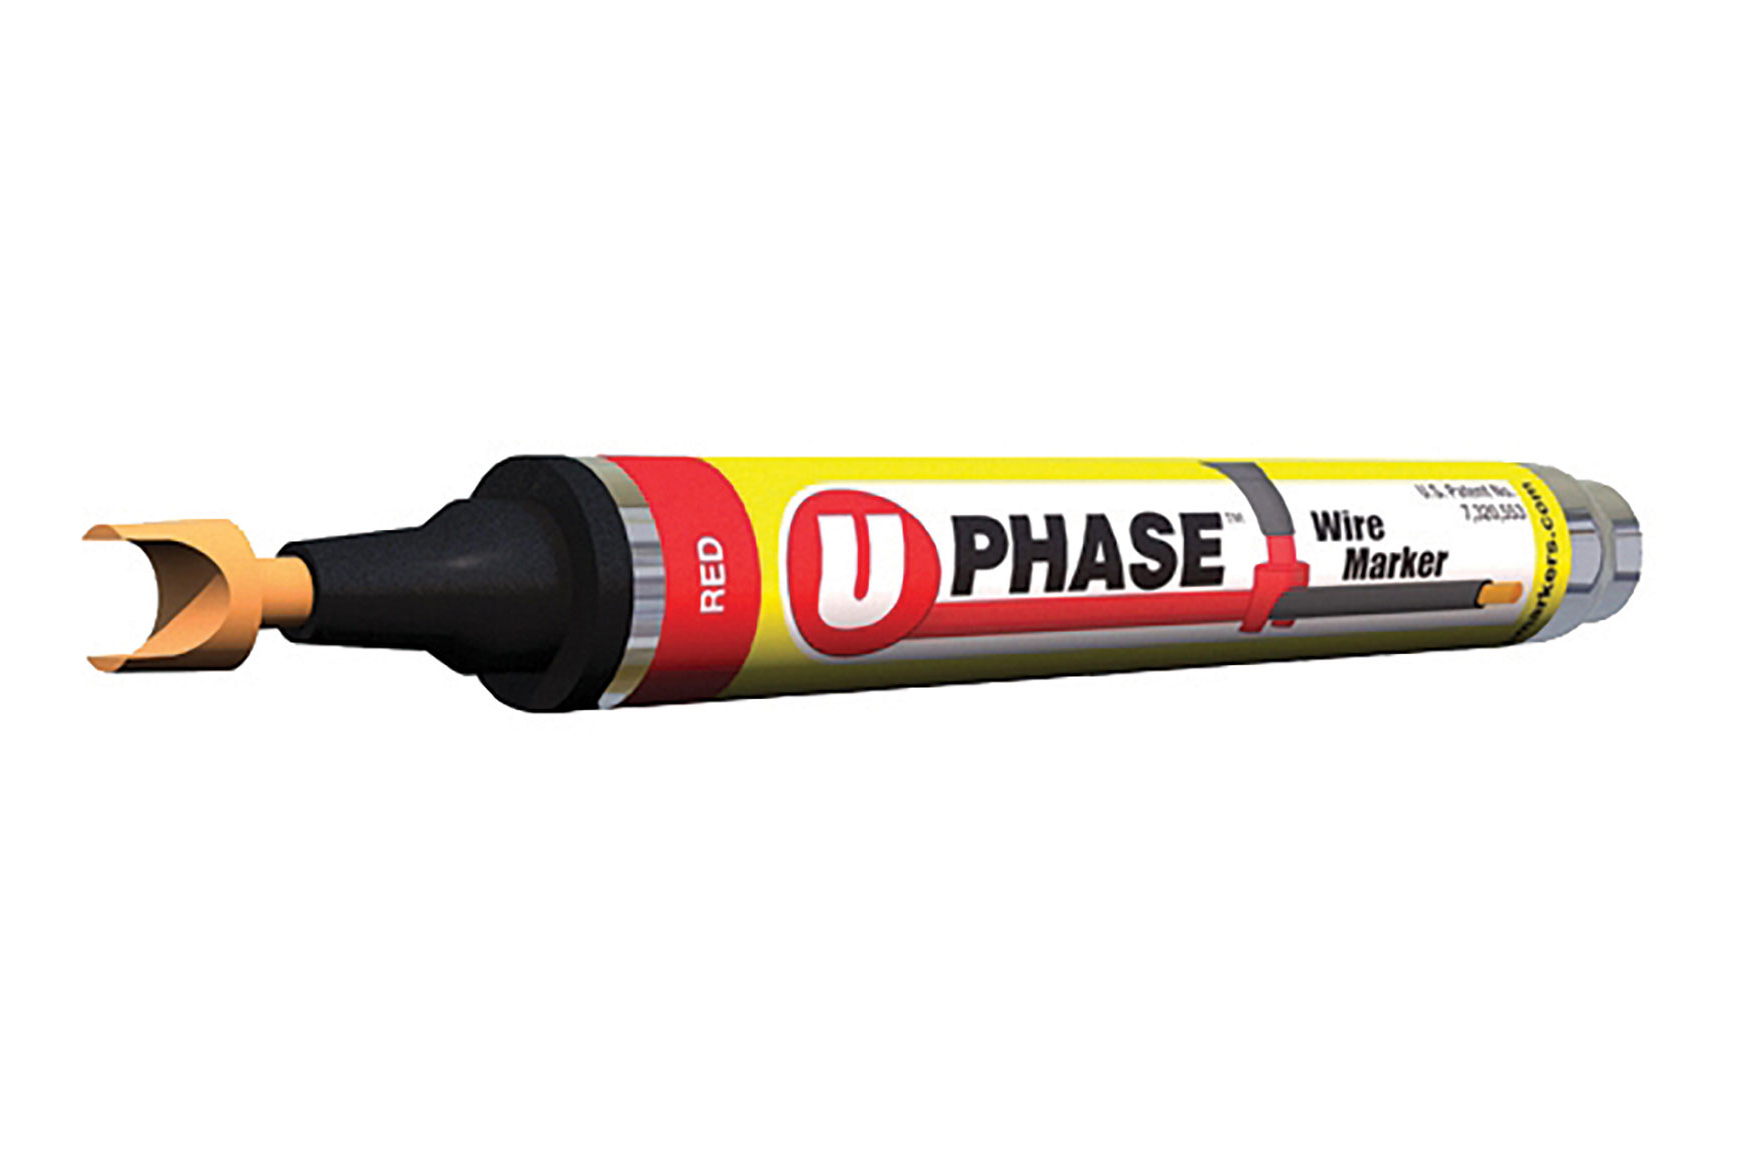 UMark_U-Phase-Wire-Marker.jpg